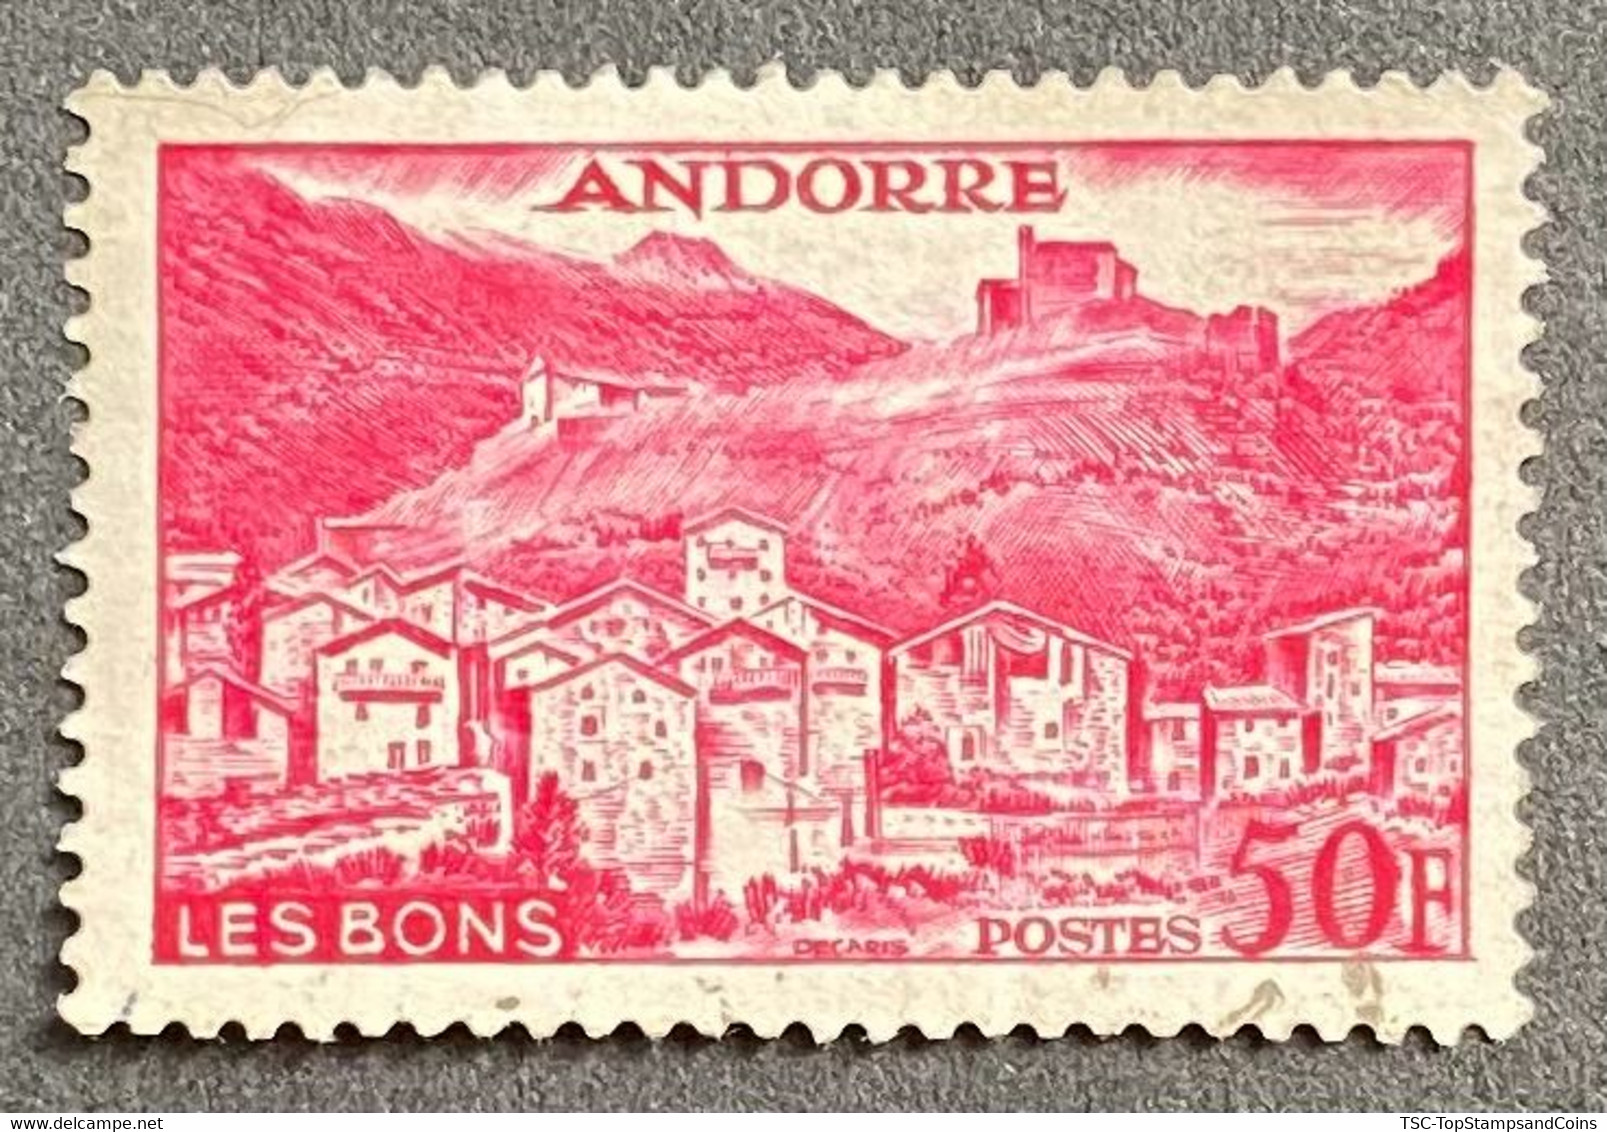 ADFR0152U - Paysages De La Principauté - 50 F Used Stamp - French Andorra - 1955 - Gebraucht